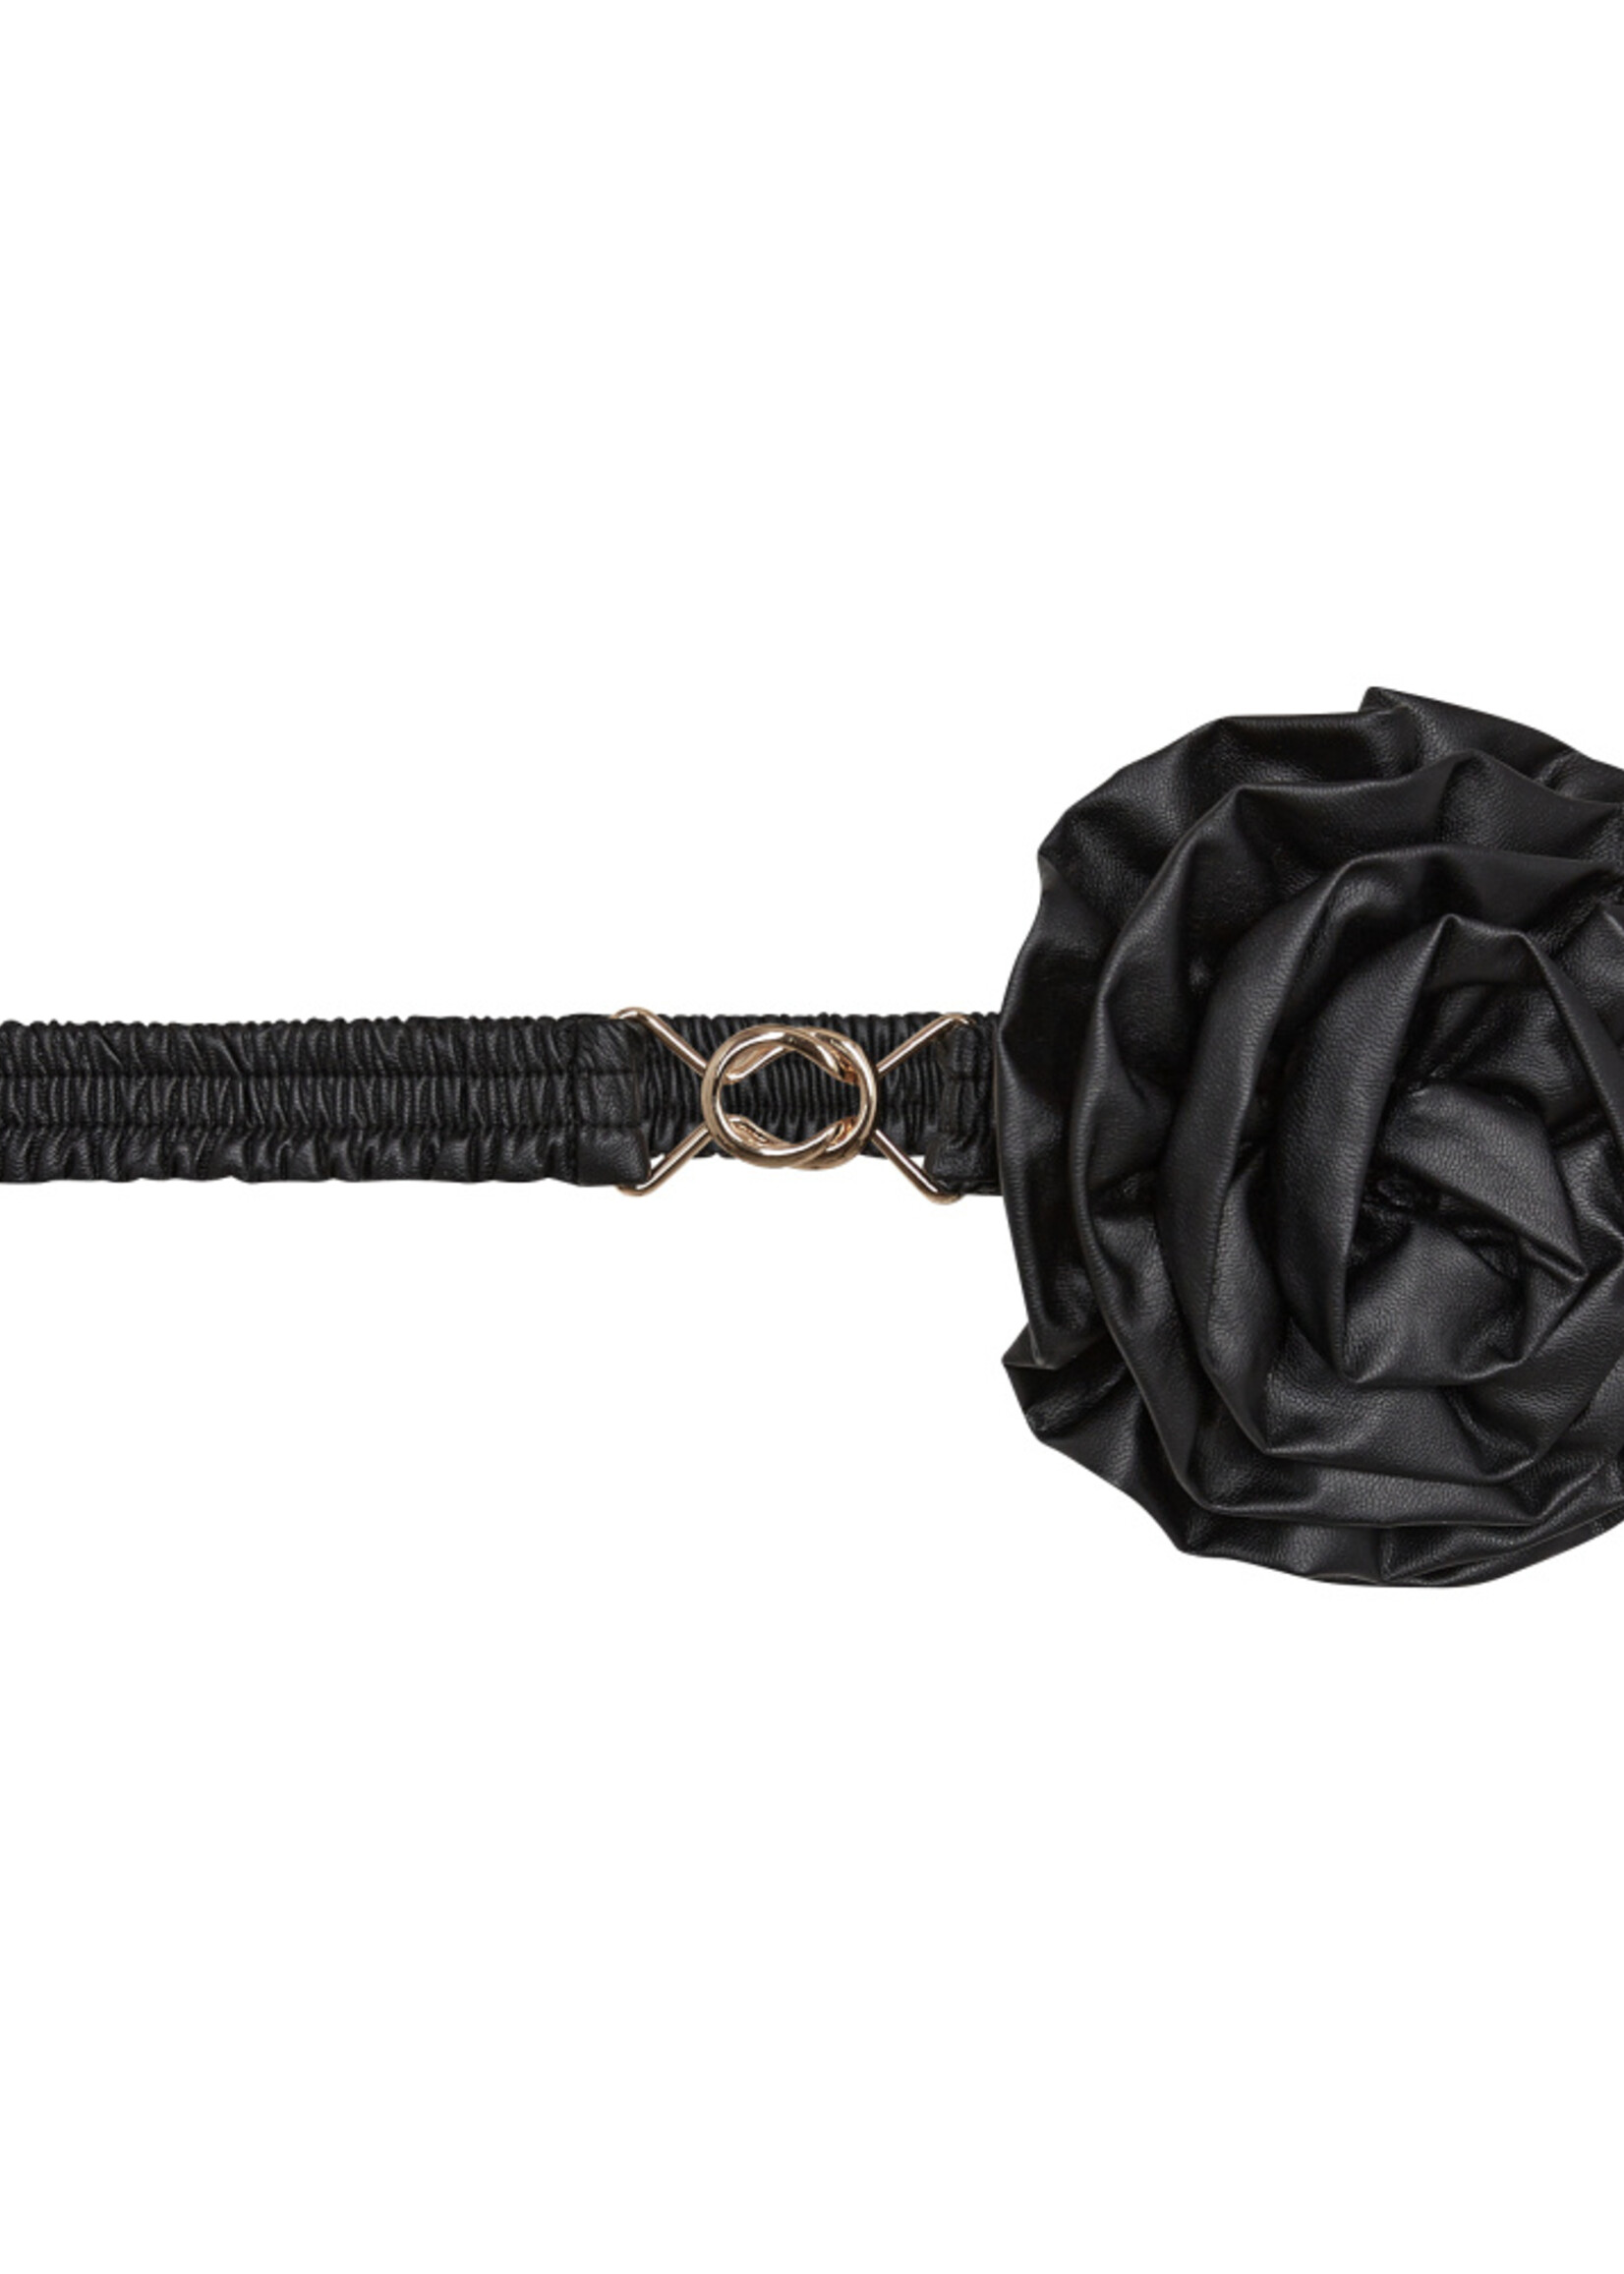 Co'Couture MetallicCC Rose Belt - Black